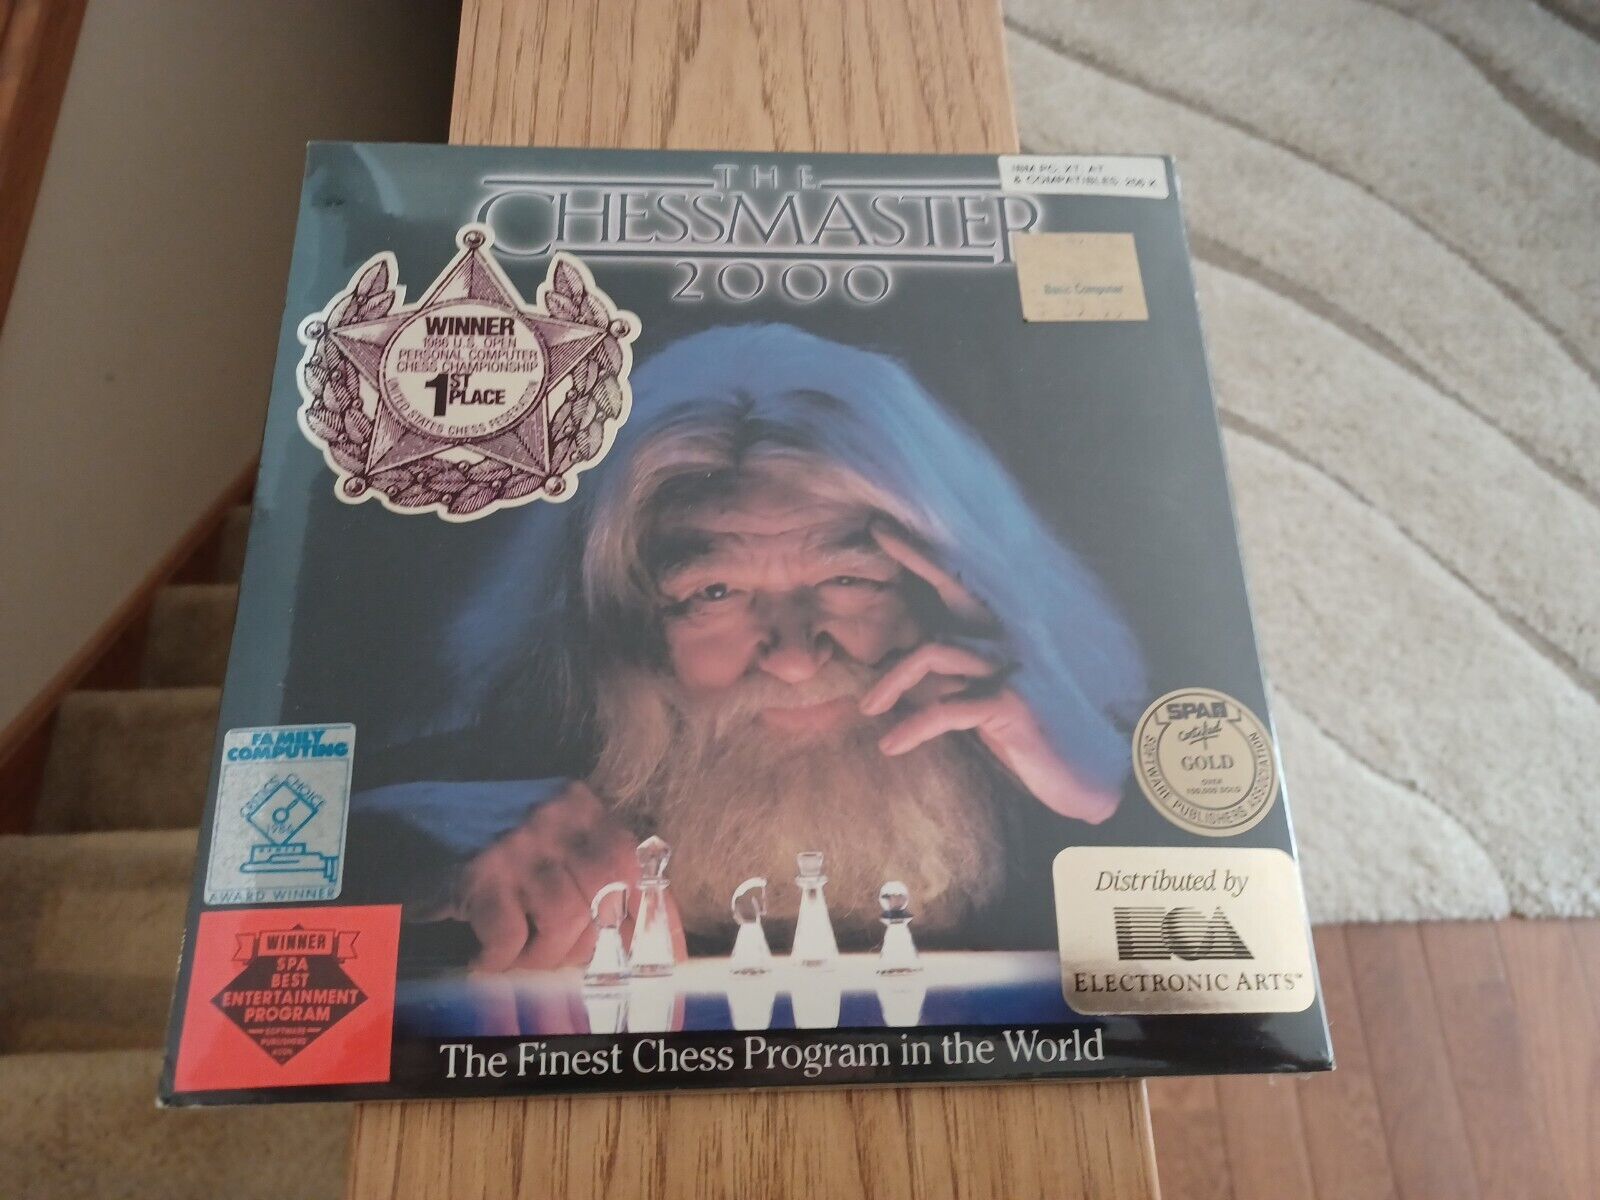 The Chessmaster 2000 Floppy Disk PC Brand New Sealed